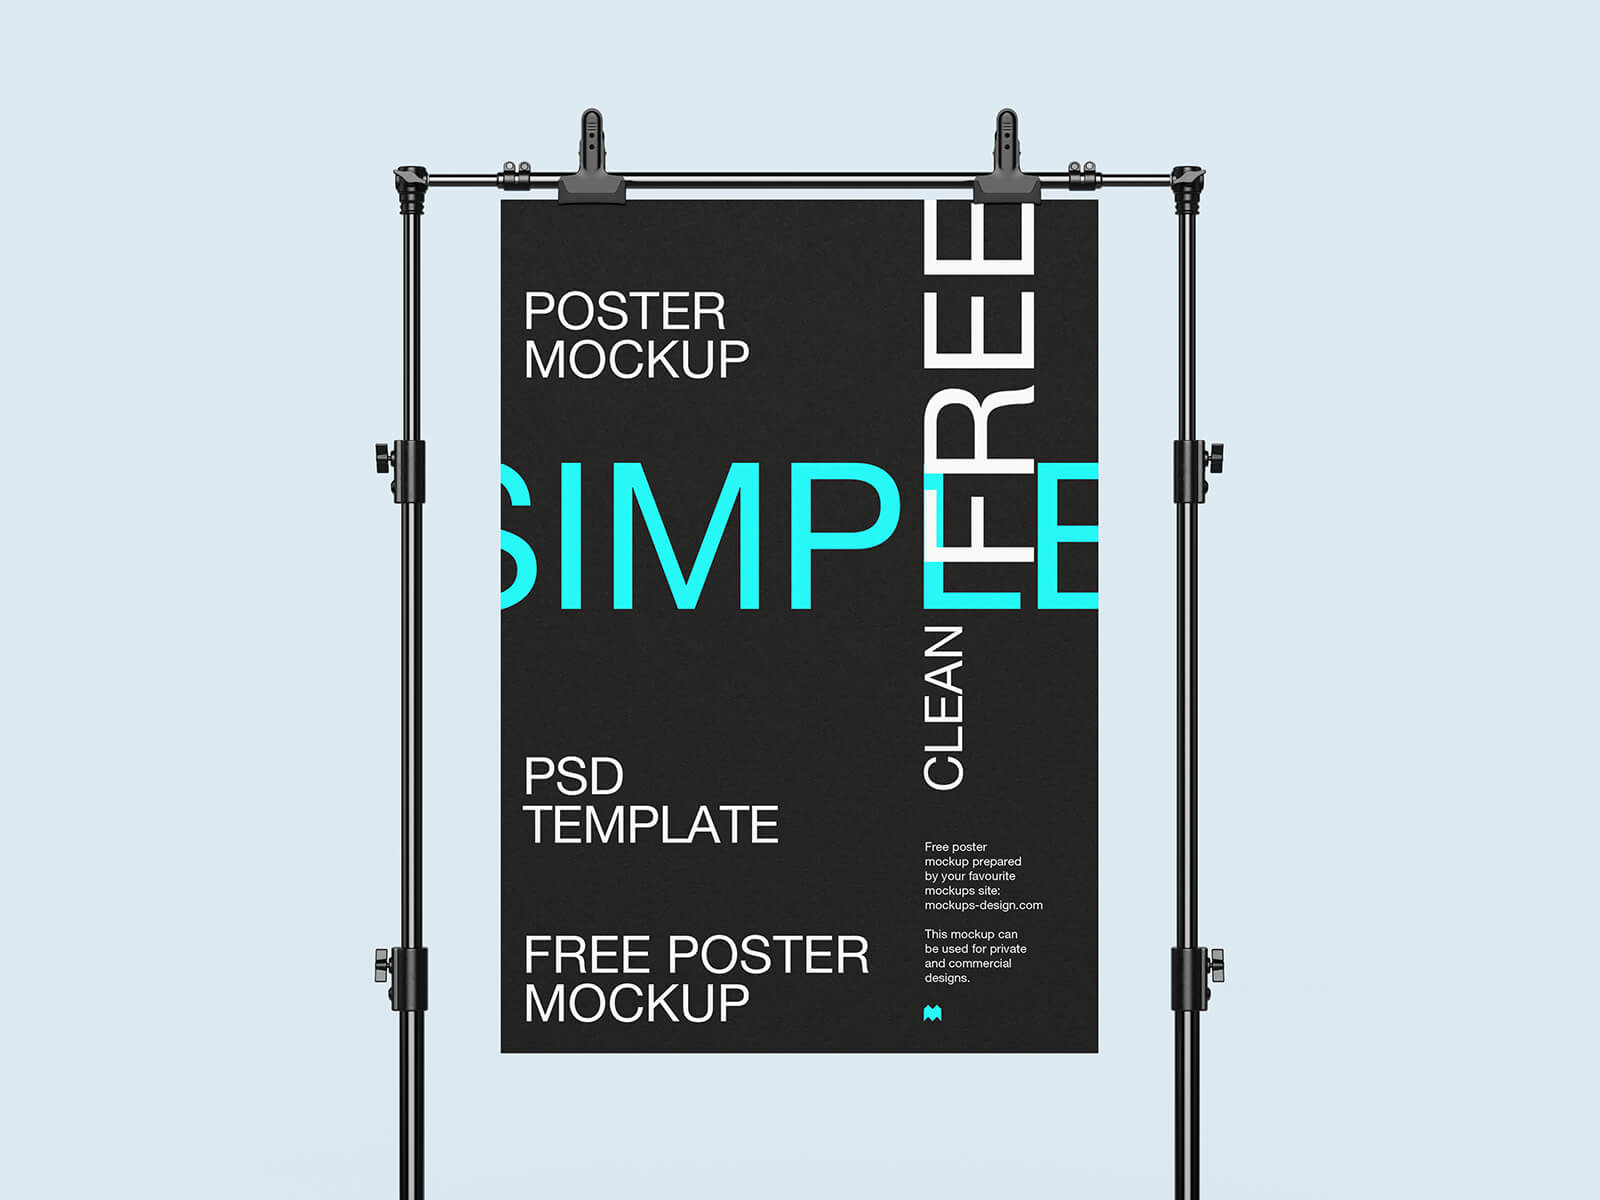 Free Poster On Tripod Mockup PSD